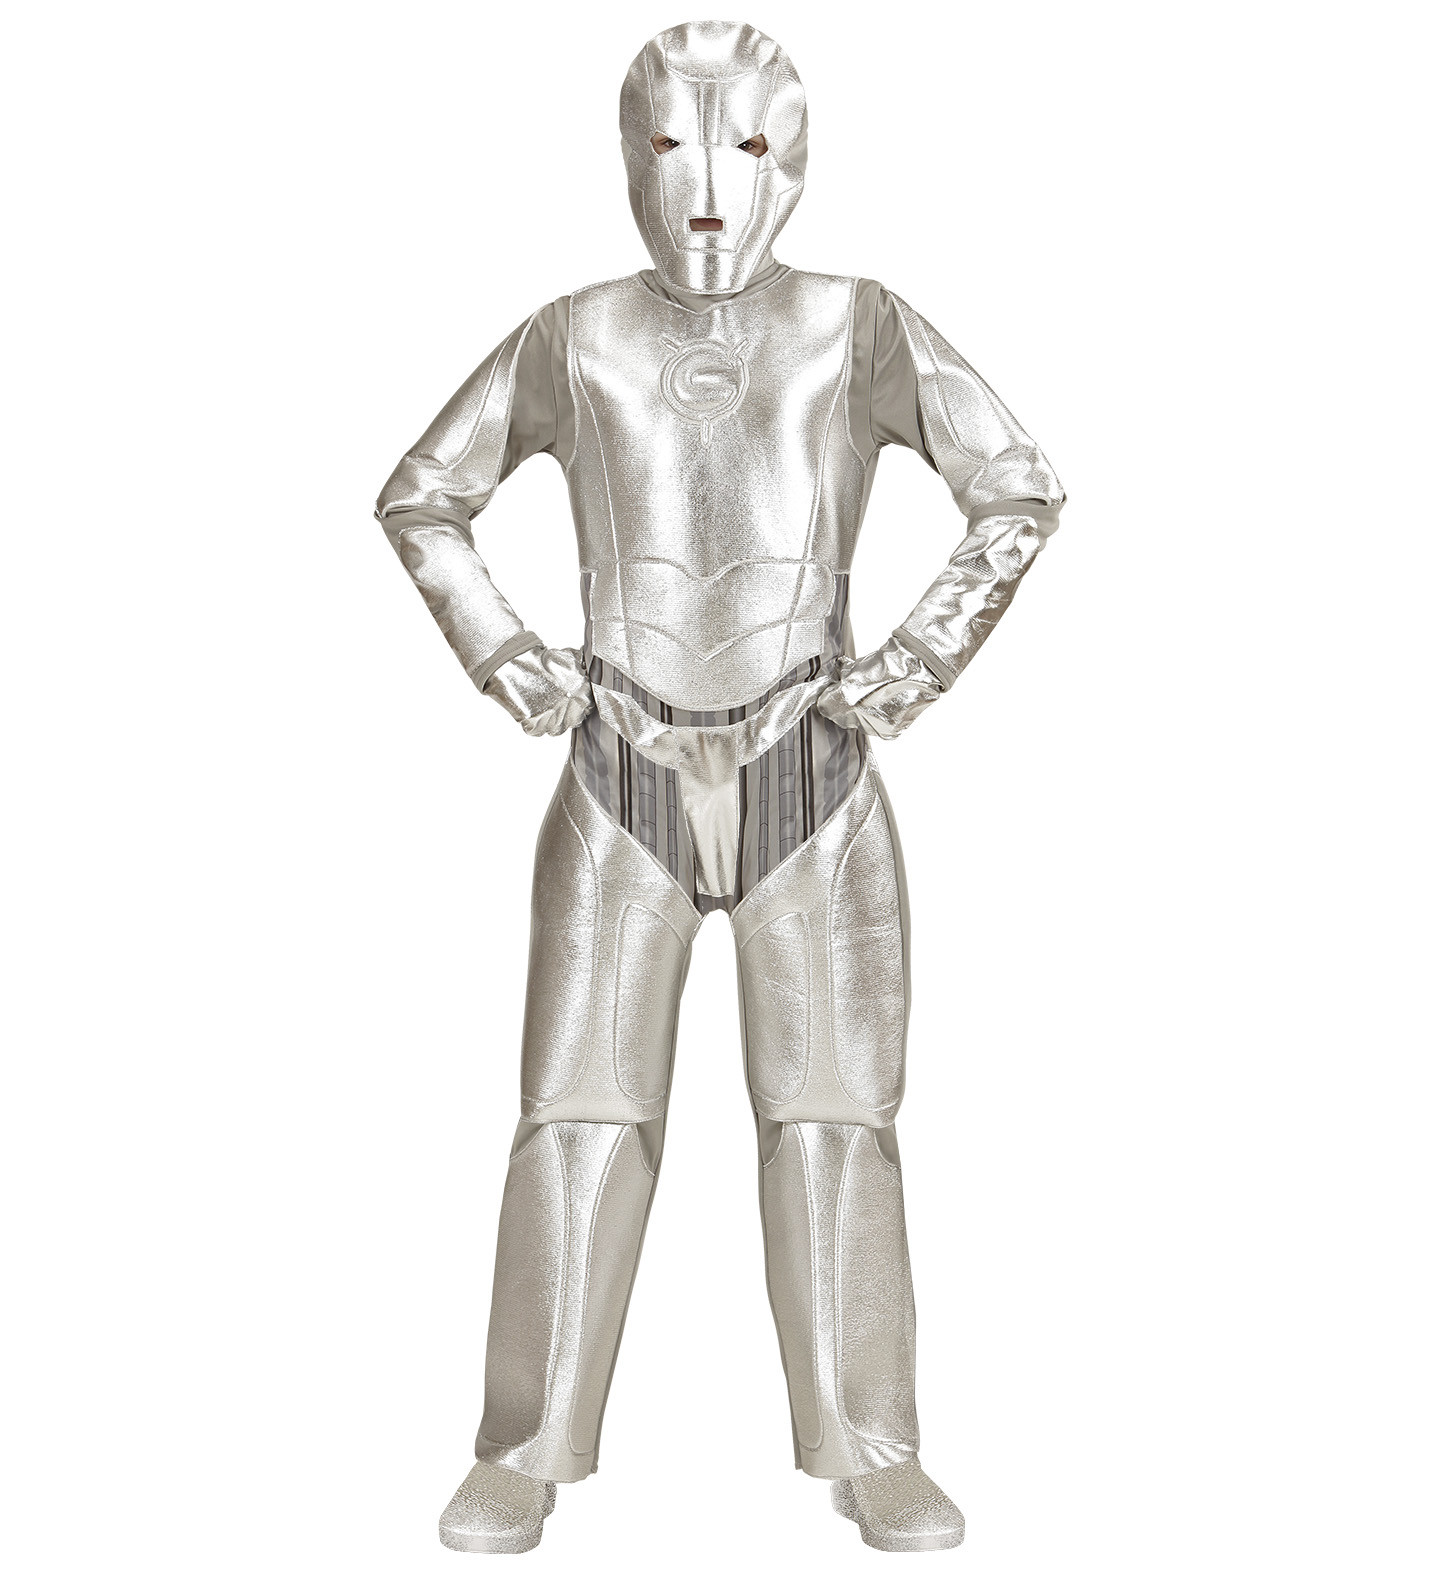 Costume Carnevale Bimbo Robot | Pelusciamo.com